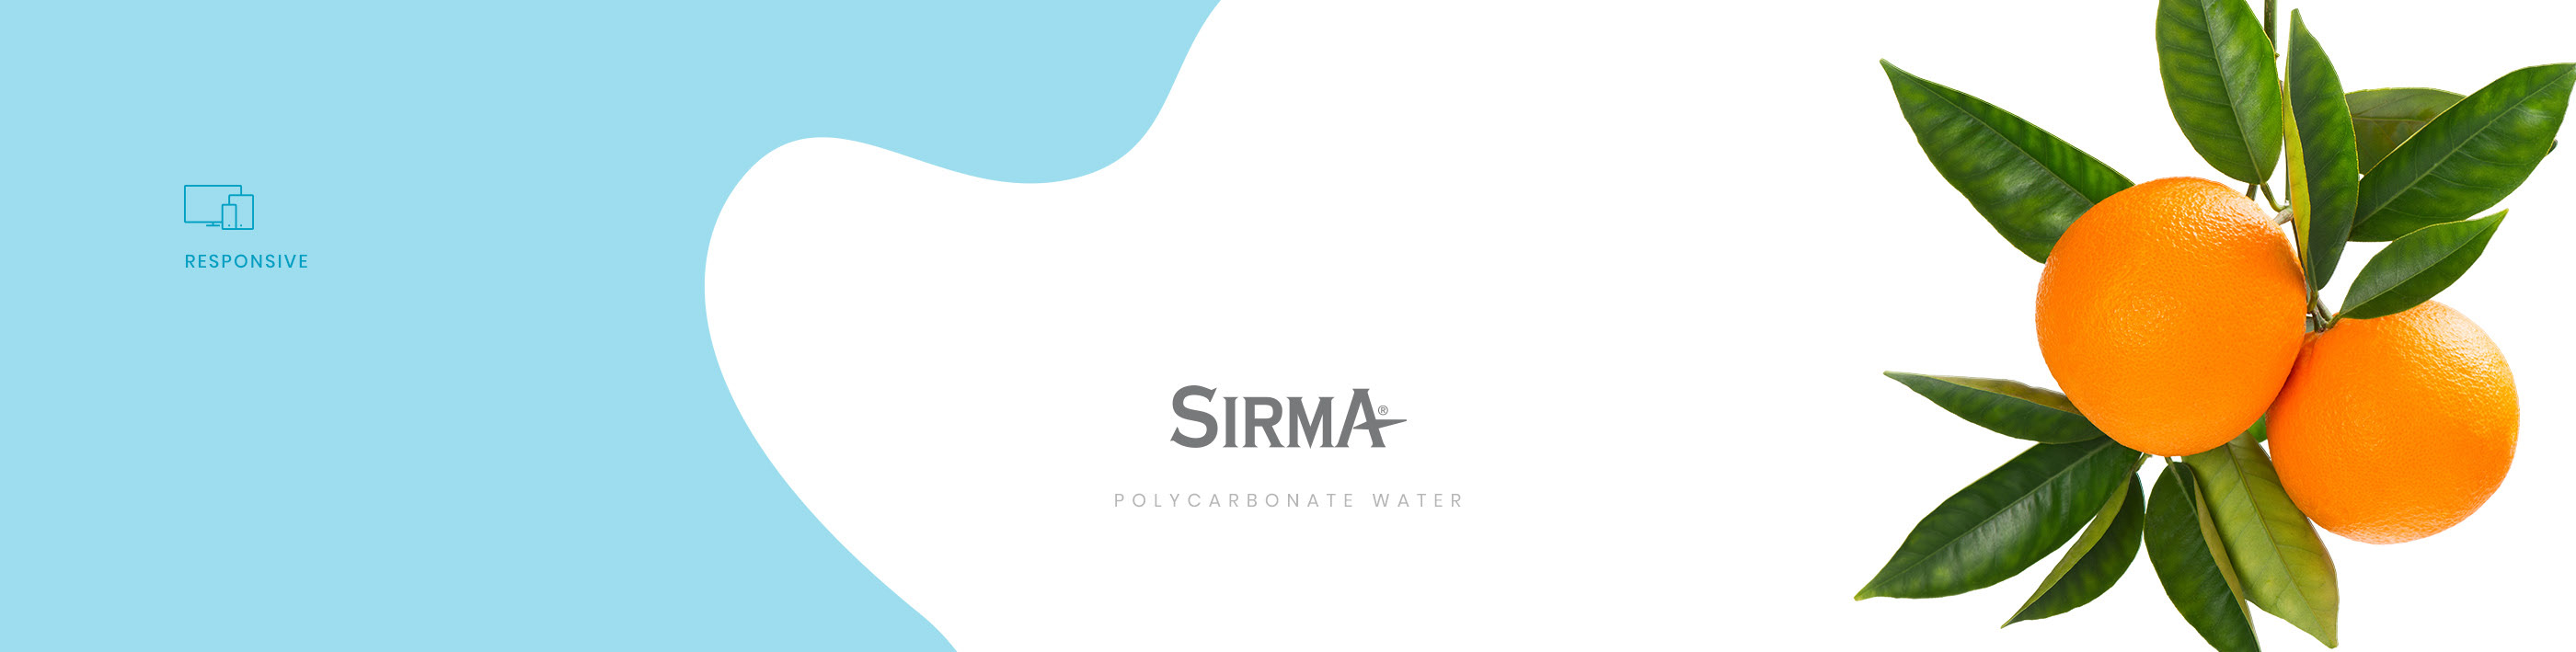 Sirma \/ Polycarbonate Water on Behancea3fe7980253791.5cdbf67d4fd47.jpg